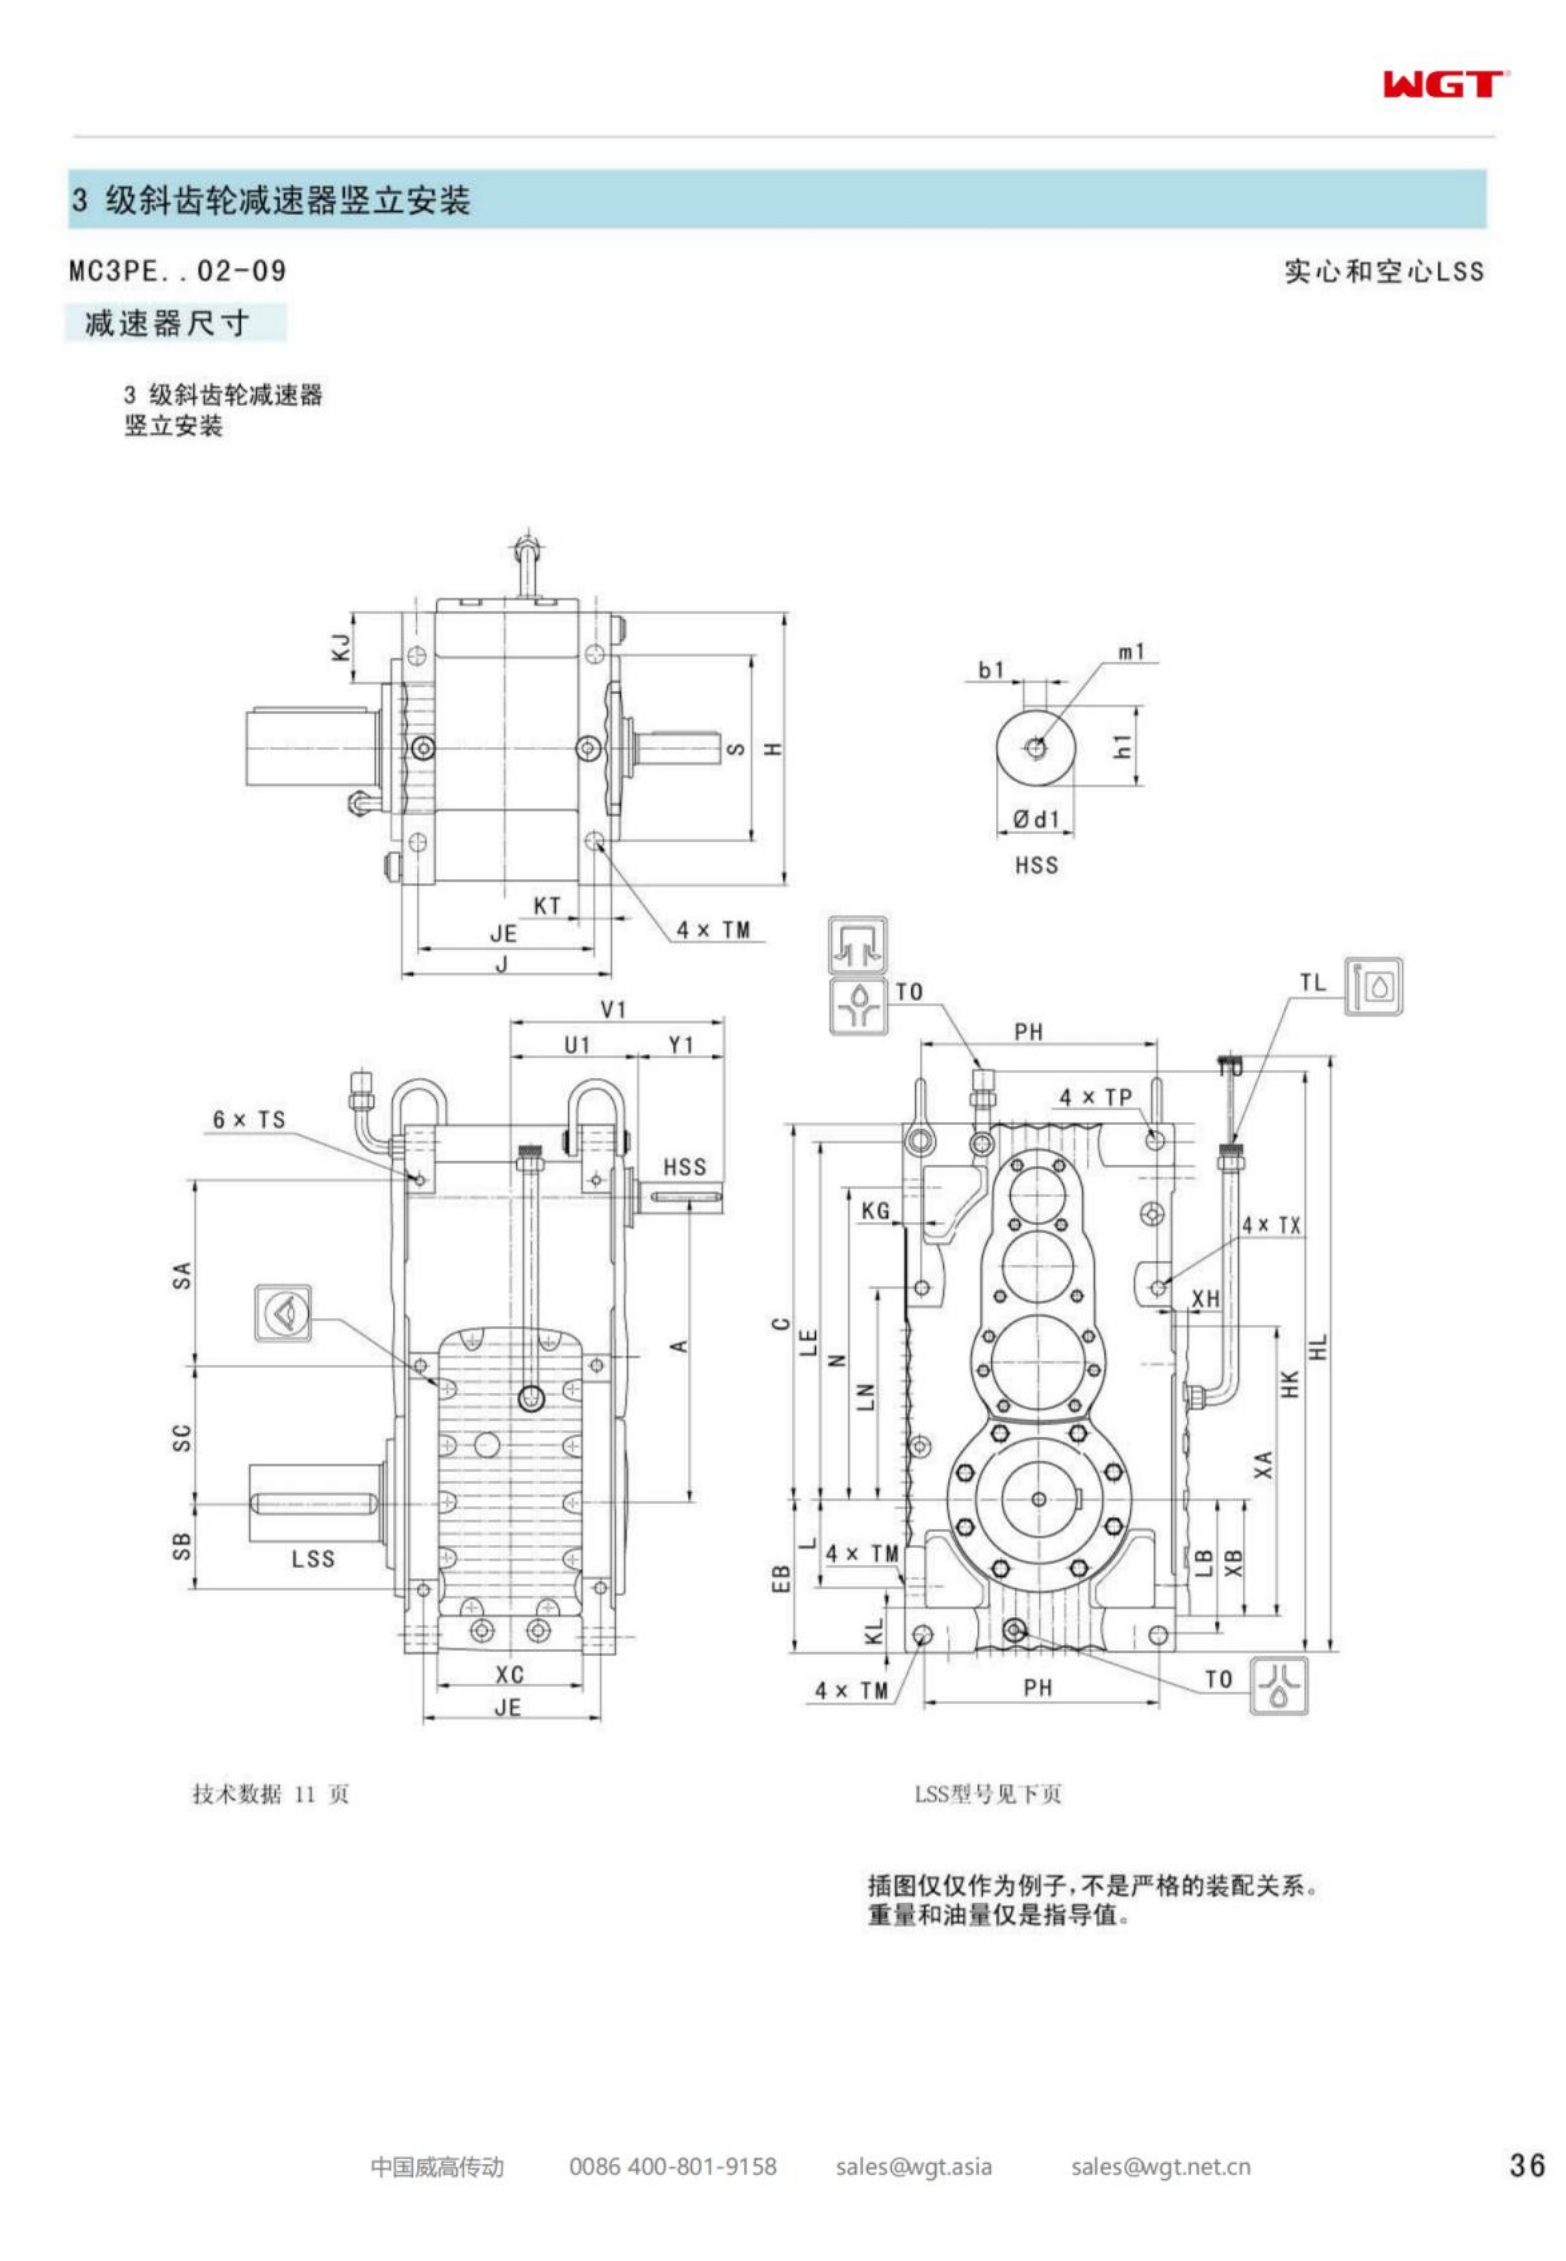 MC3PESF06 replaces _SEW_MC_Series gearbox (patent)